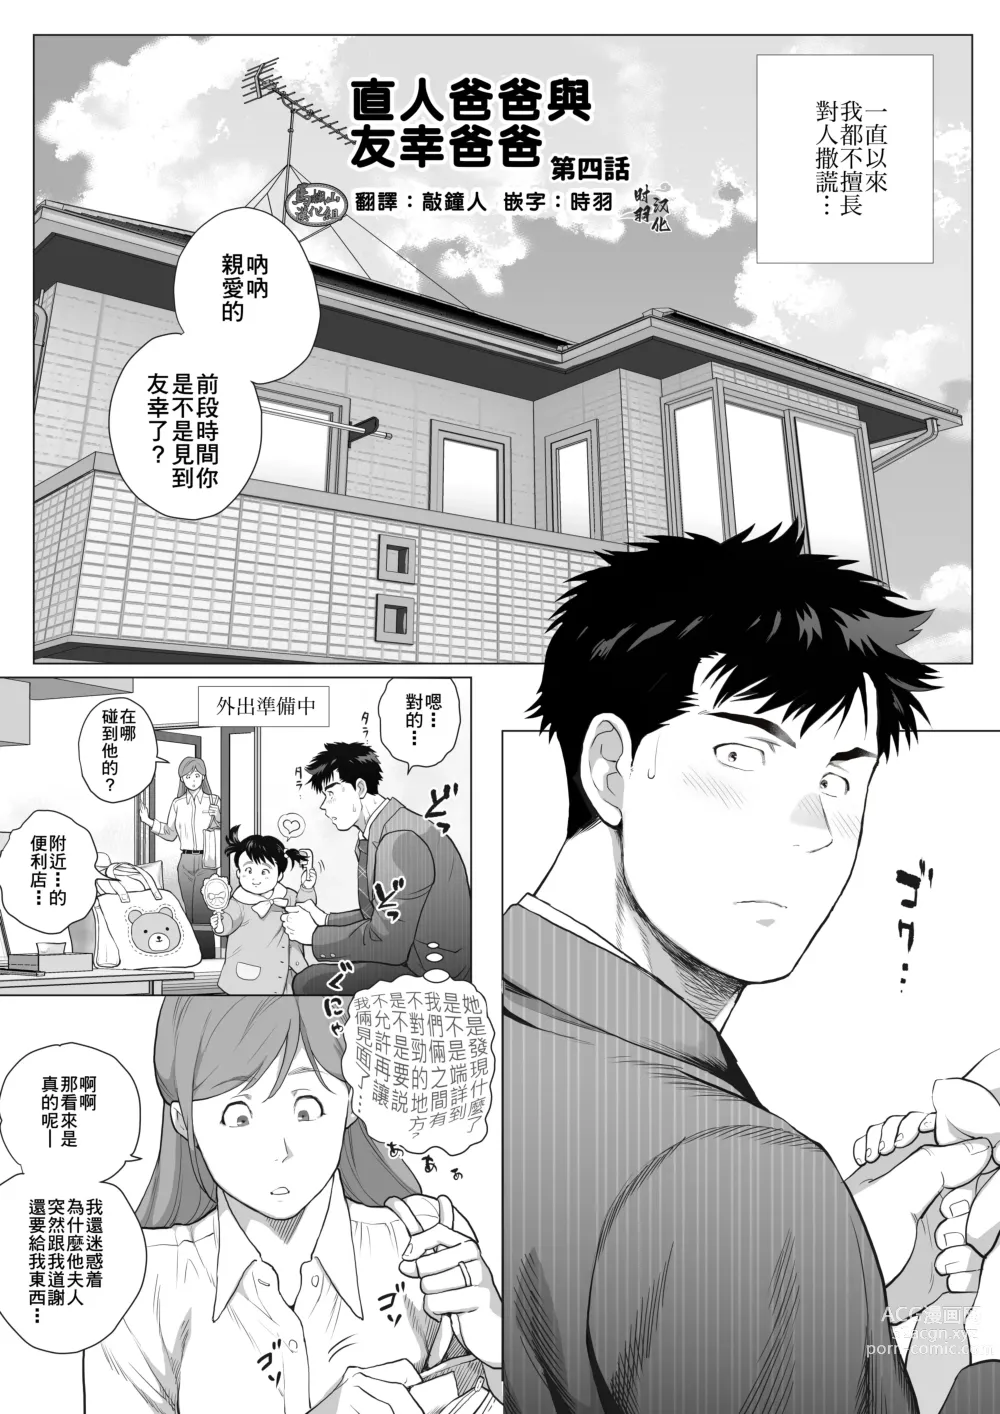 Page 1 of manga 直人爸爸与友幸爸爸 第四话